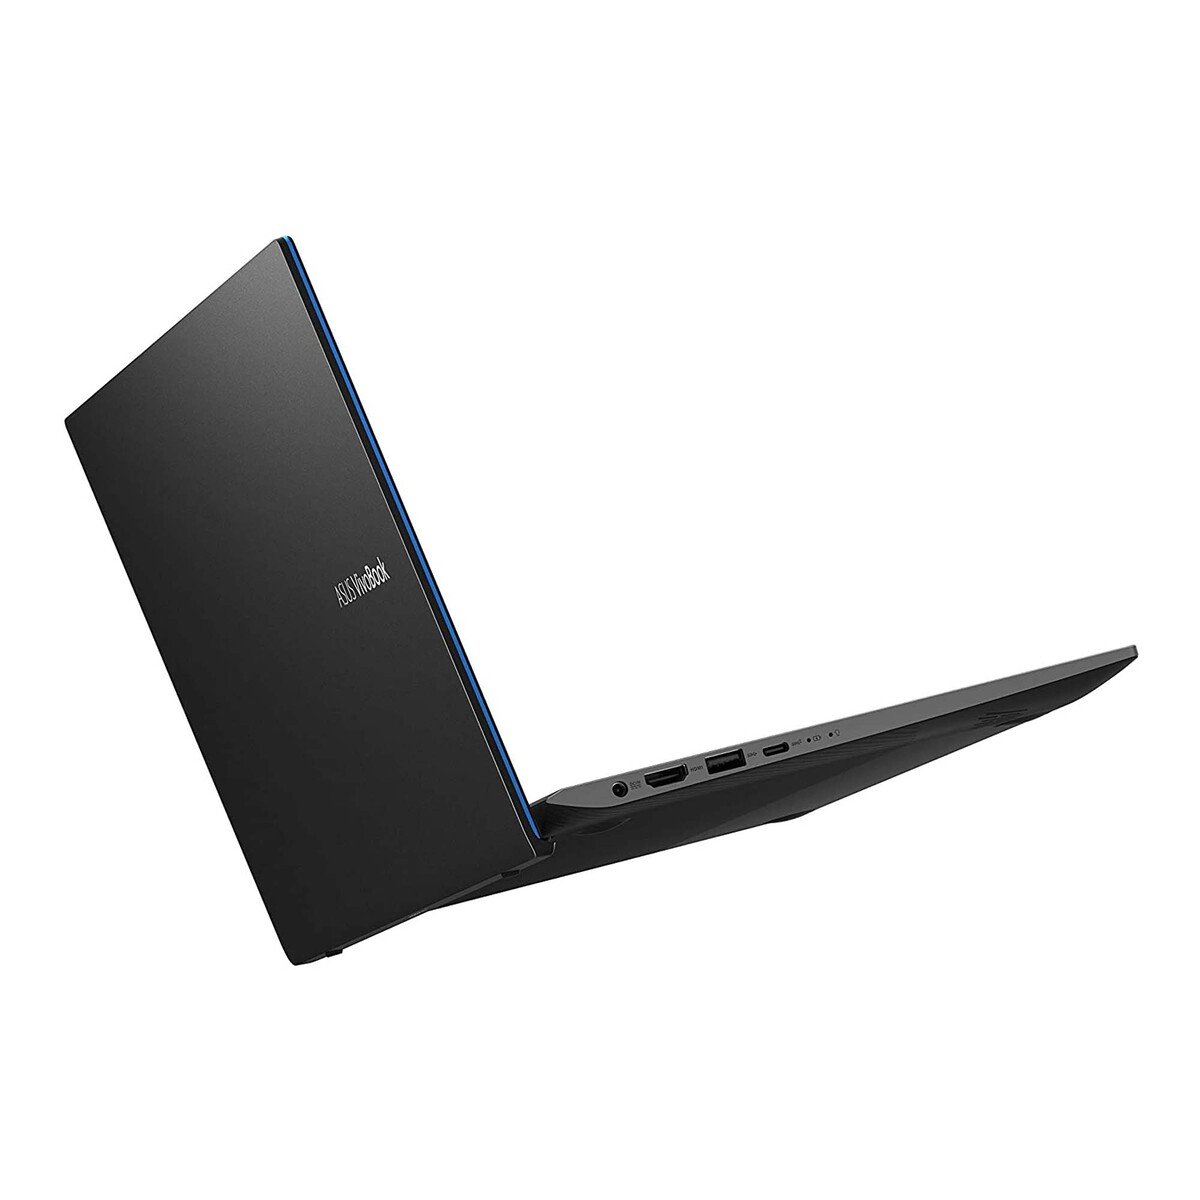 Asus VivoBook S14 S431FL-AM021T Laptop (Gun Metal Gray) - Intel i5-8265U, 8GB RAM, 512GB SSD, NVIDIA GeForce MX250,14 Inch, Windows 10, English-Arabic Keyboard